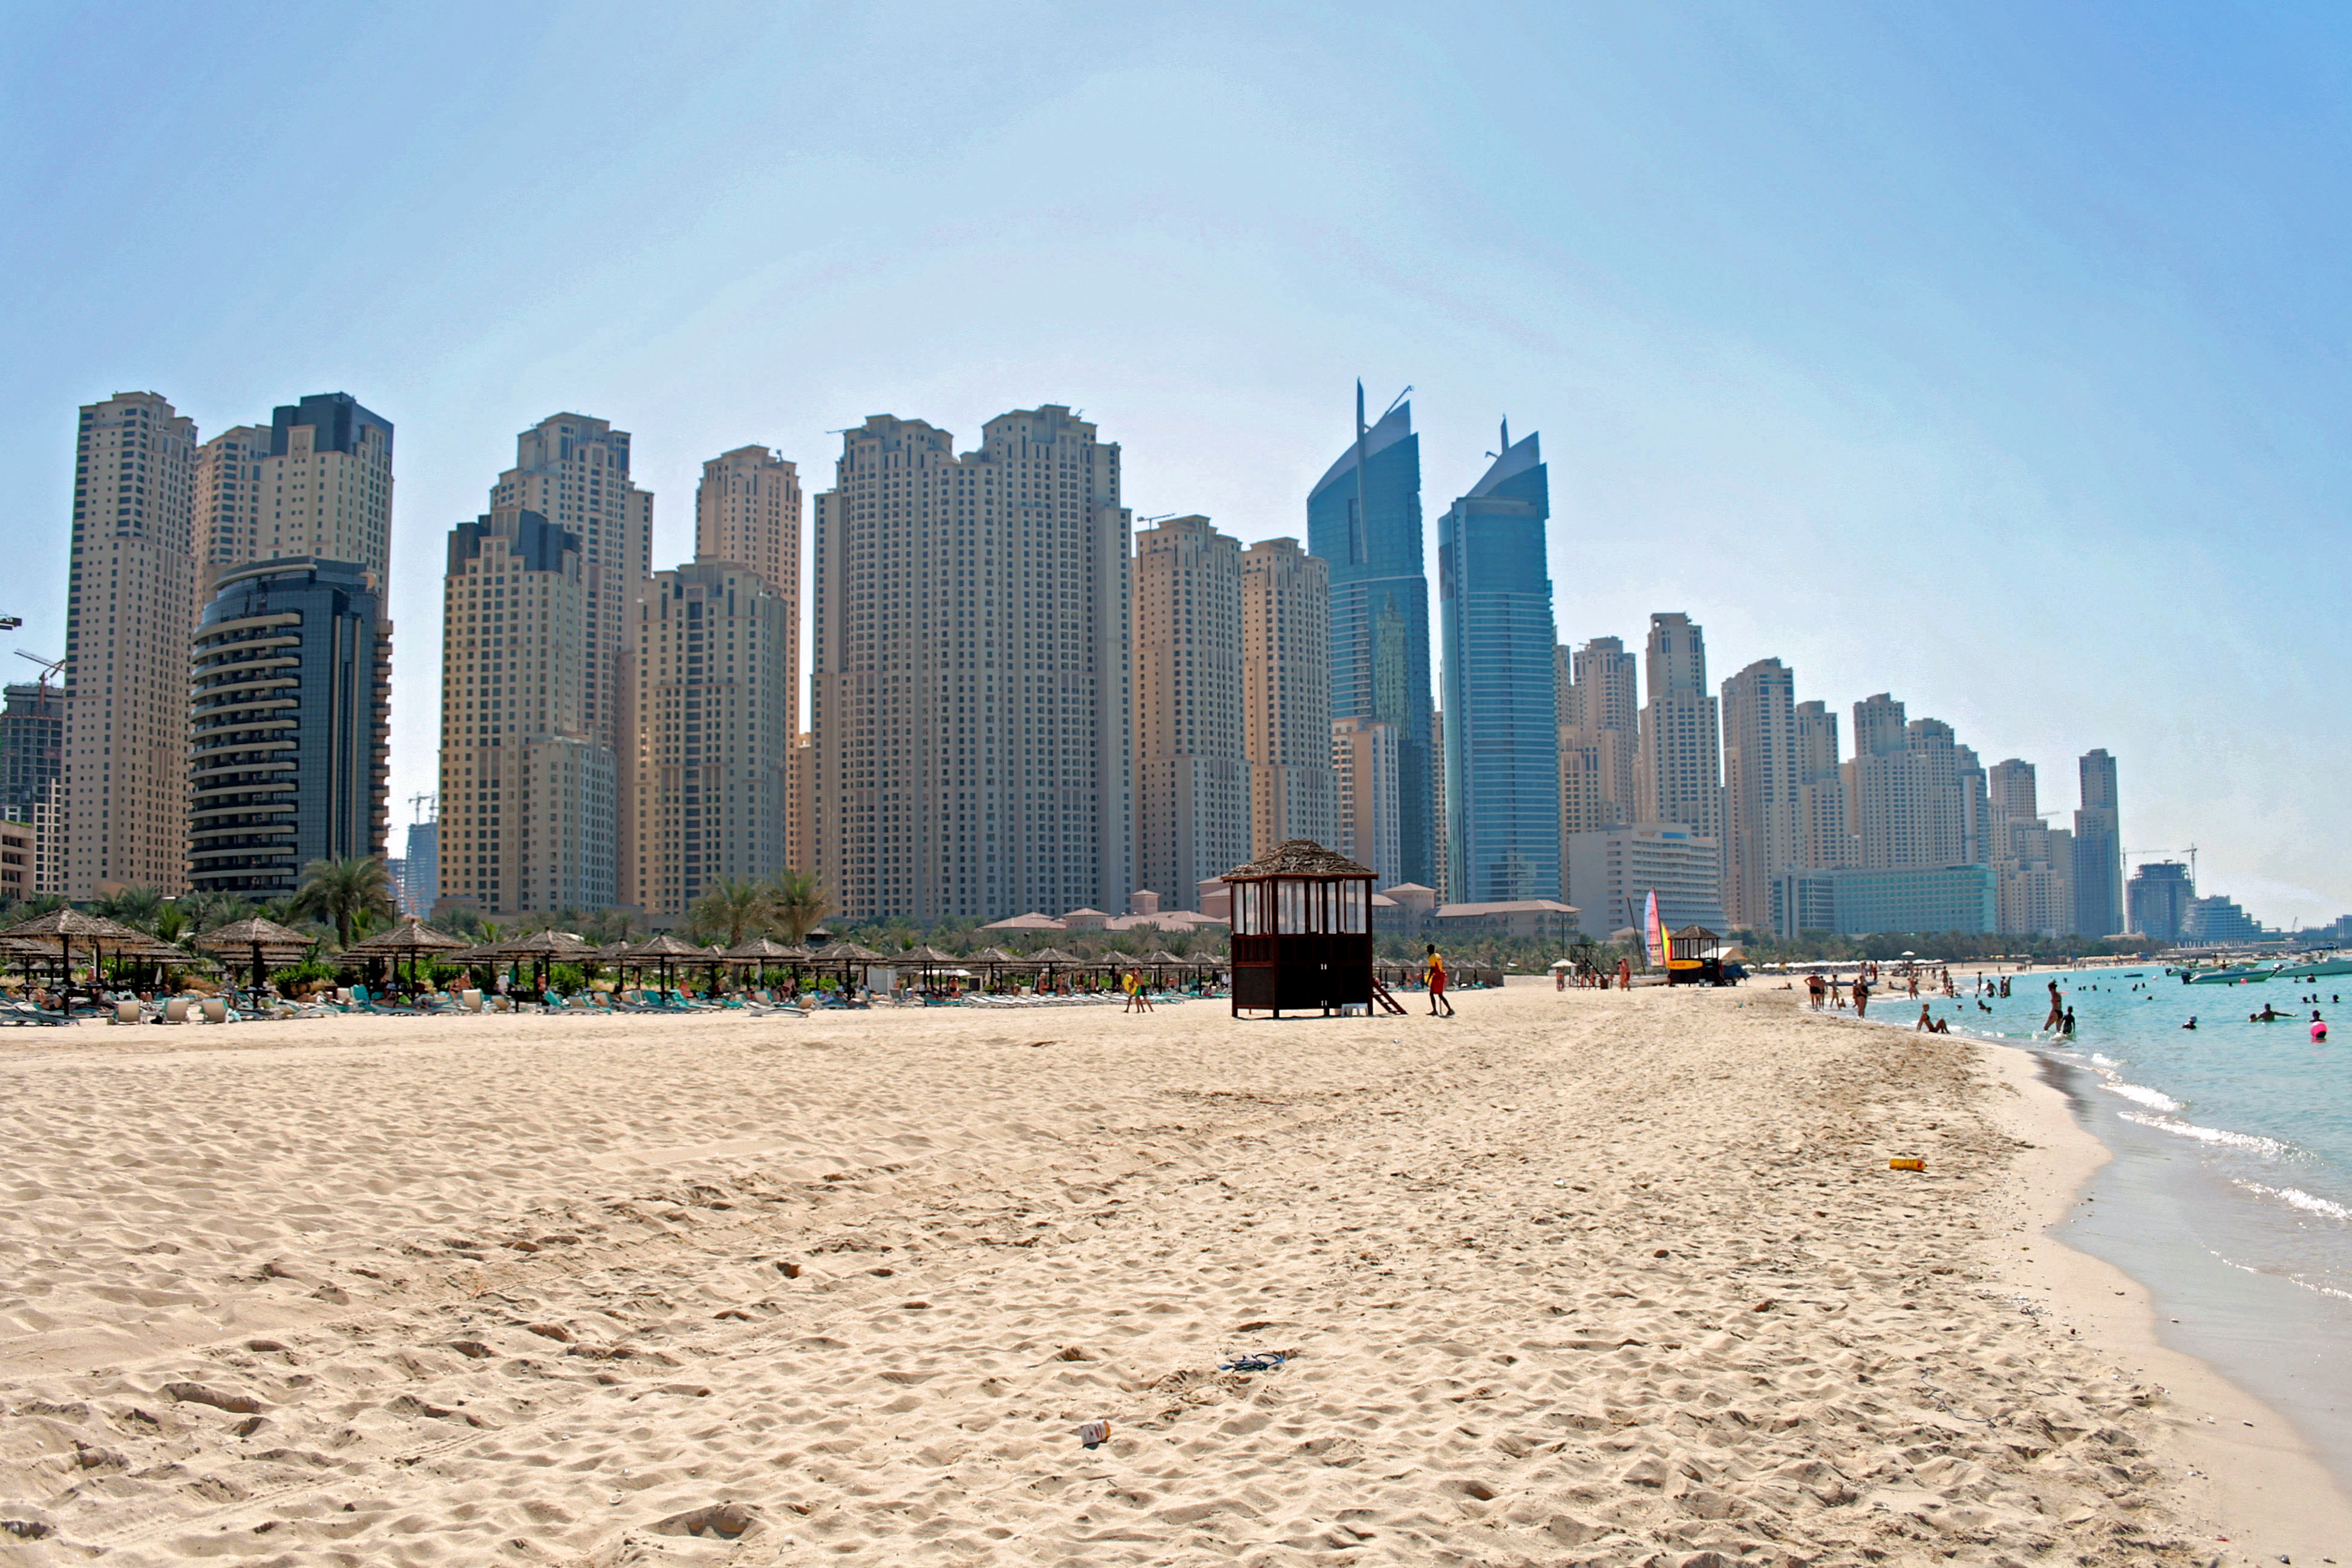 http://upload.wikimedia.org/wikipedia/commons/4/4c/Dubai_Jumeirah_Beach.JPG